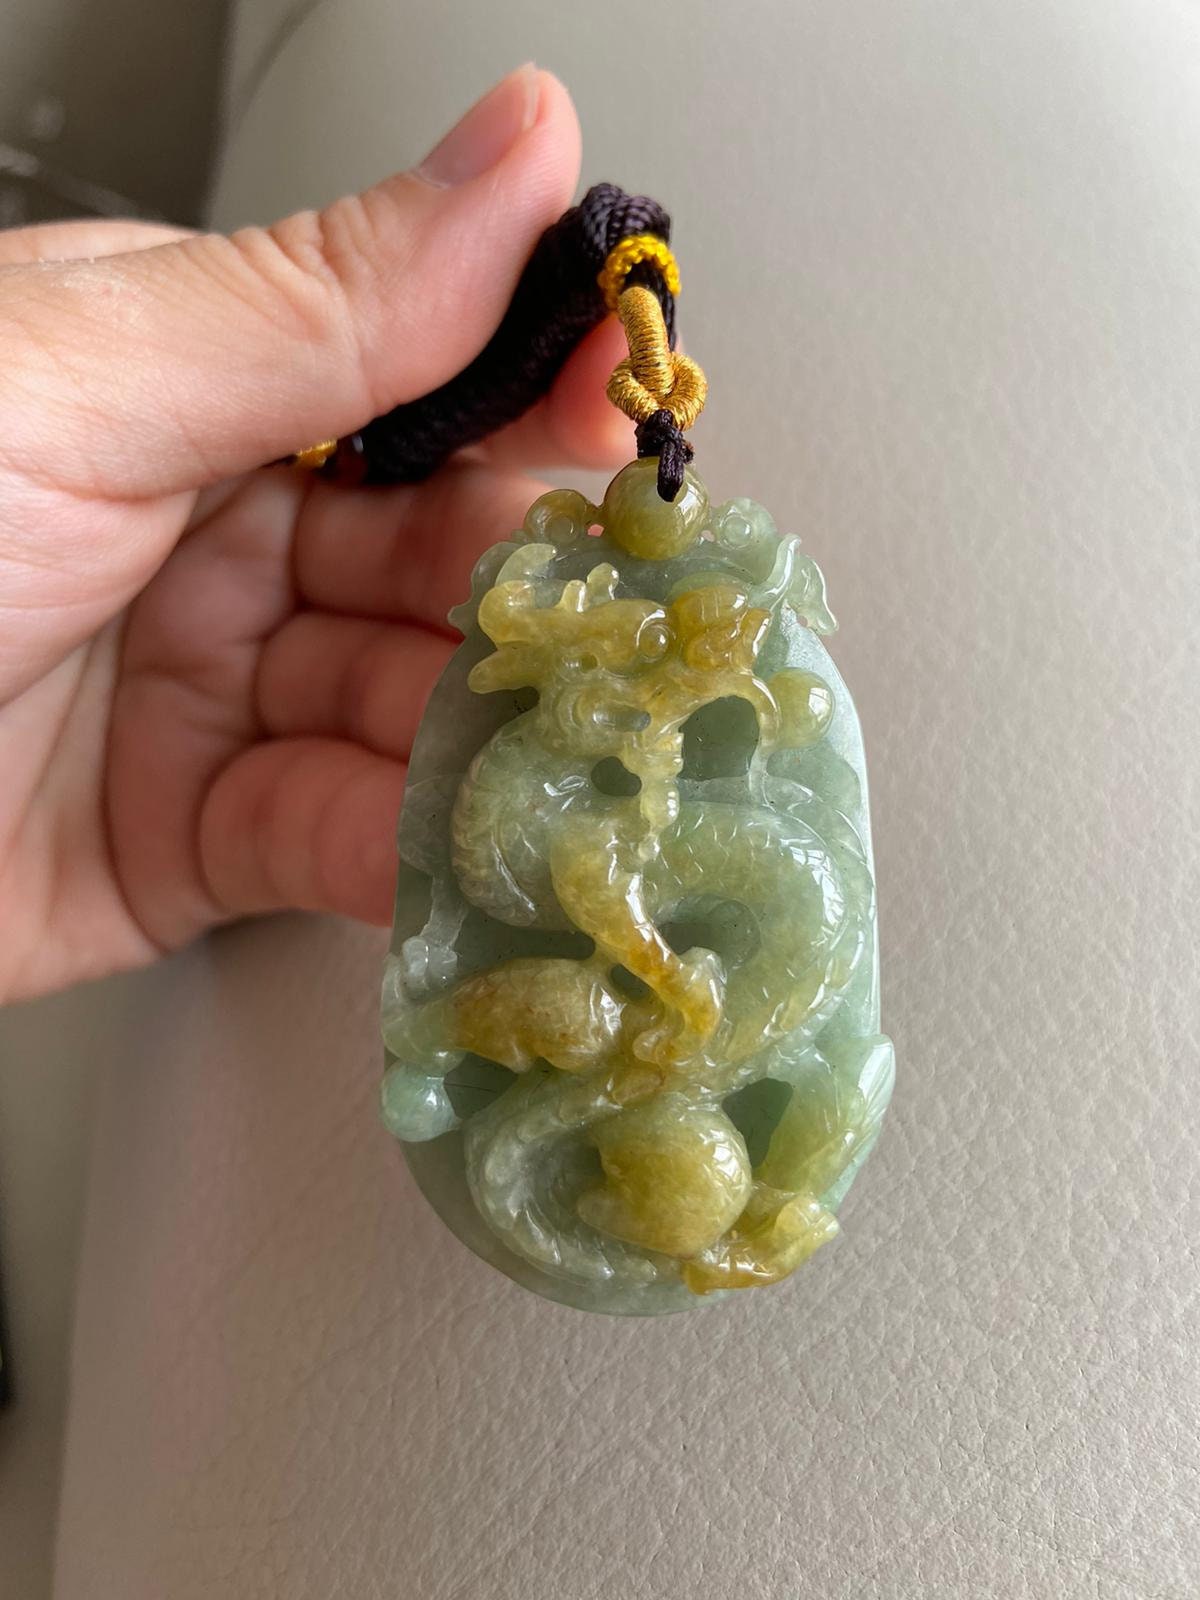 Chinese Dragon Jadeite Jade Pendant Light Green & Yellow - Etsy